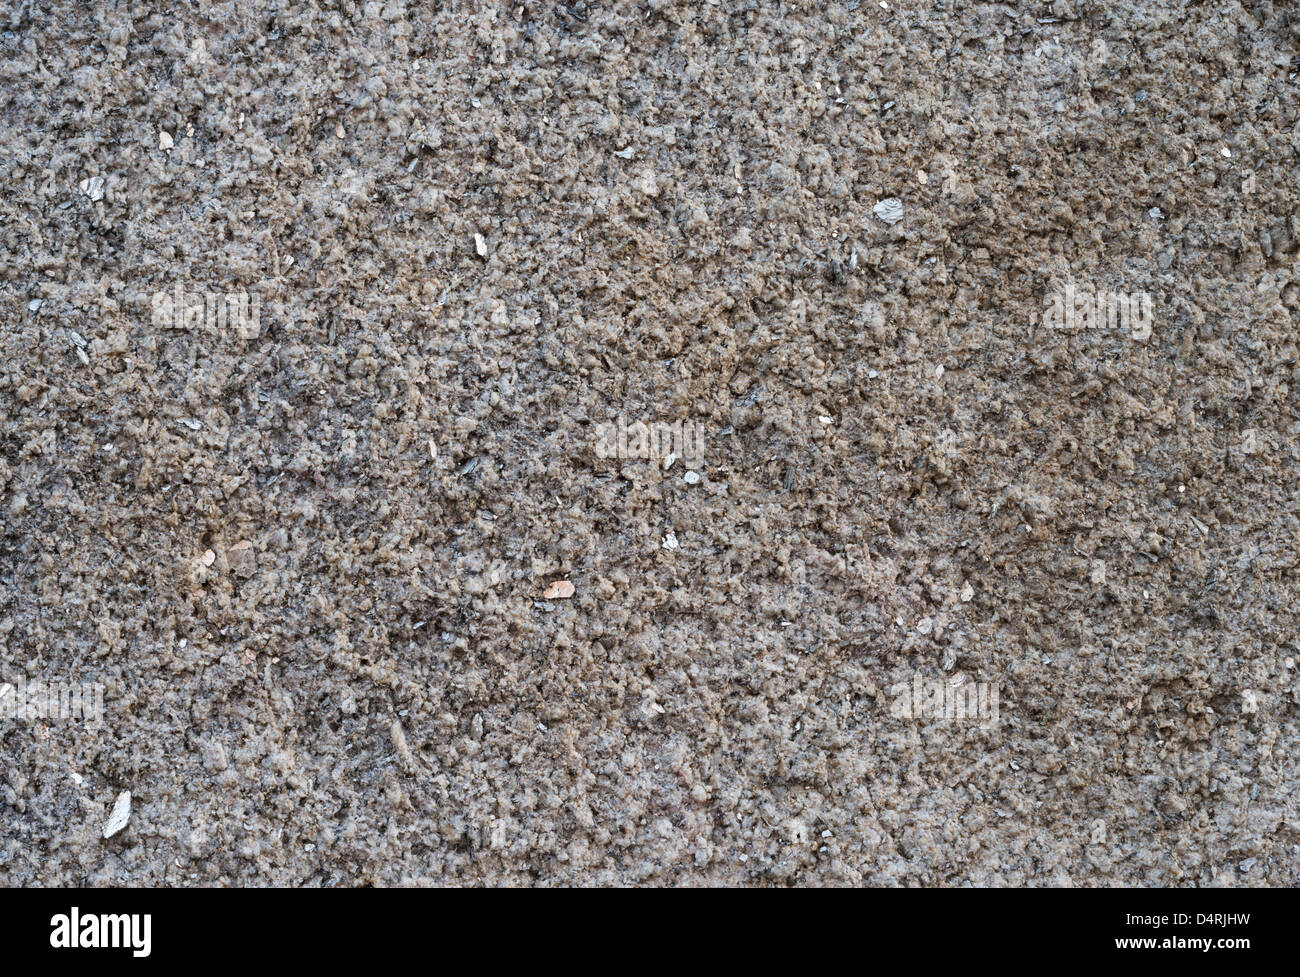 Leinster granite building stone near Dublin Castle, Dublin, Ireland. The shiny platy crystals are muscovite mica. Stock Photo